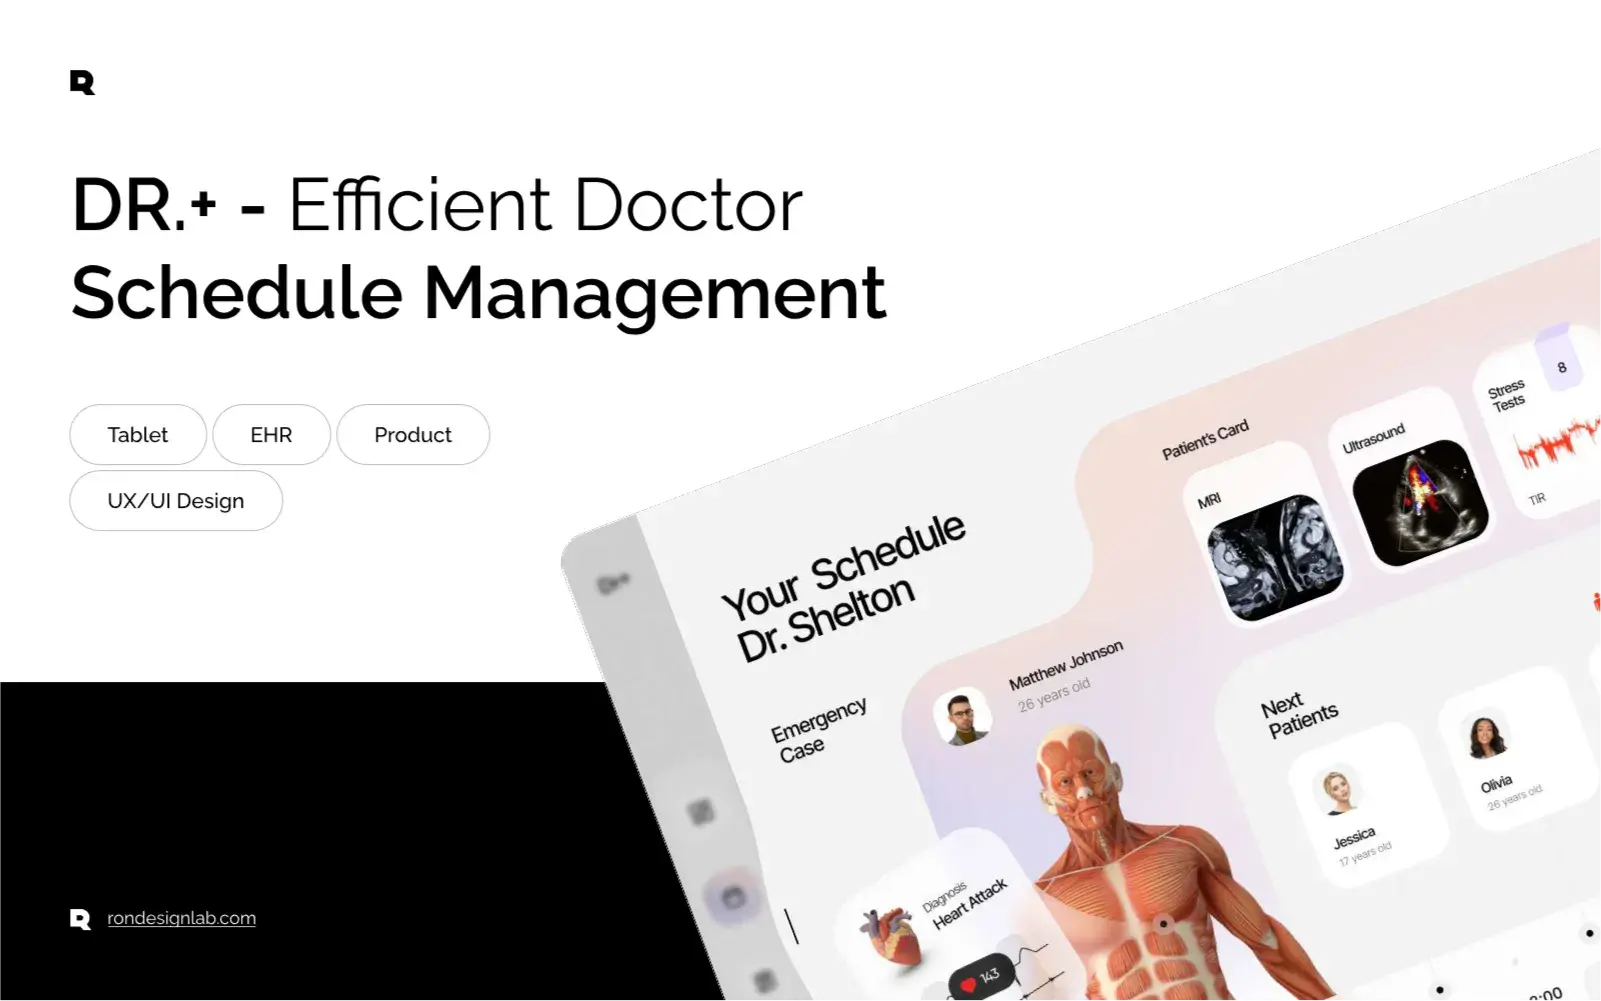 DR.+ - Efficient Doctor Schedule Management - Business